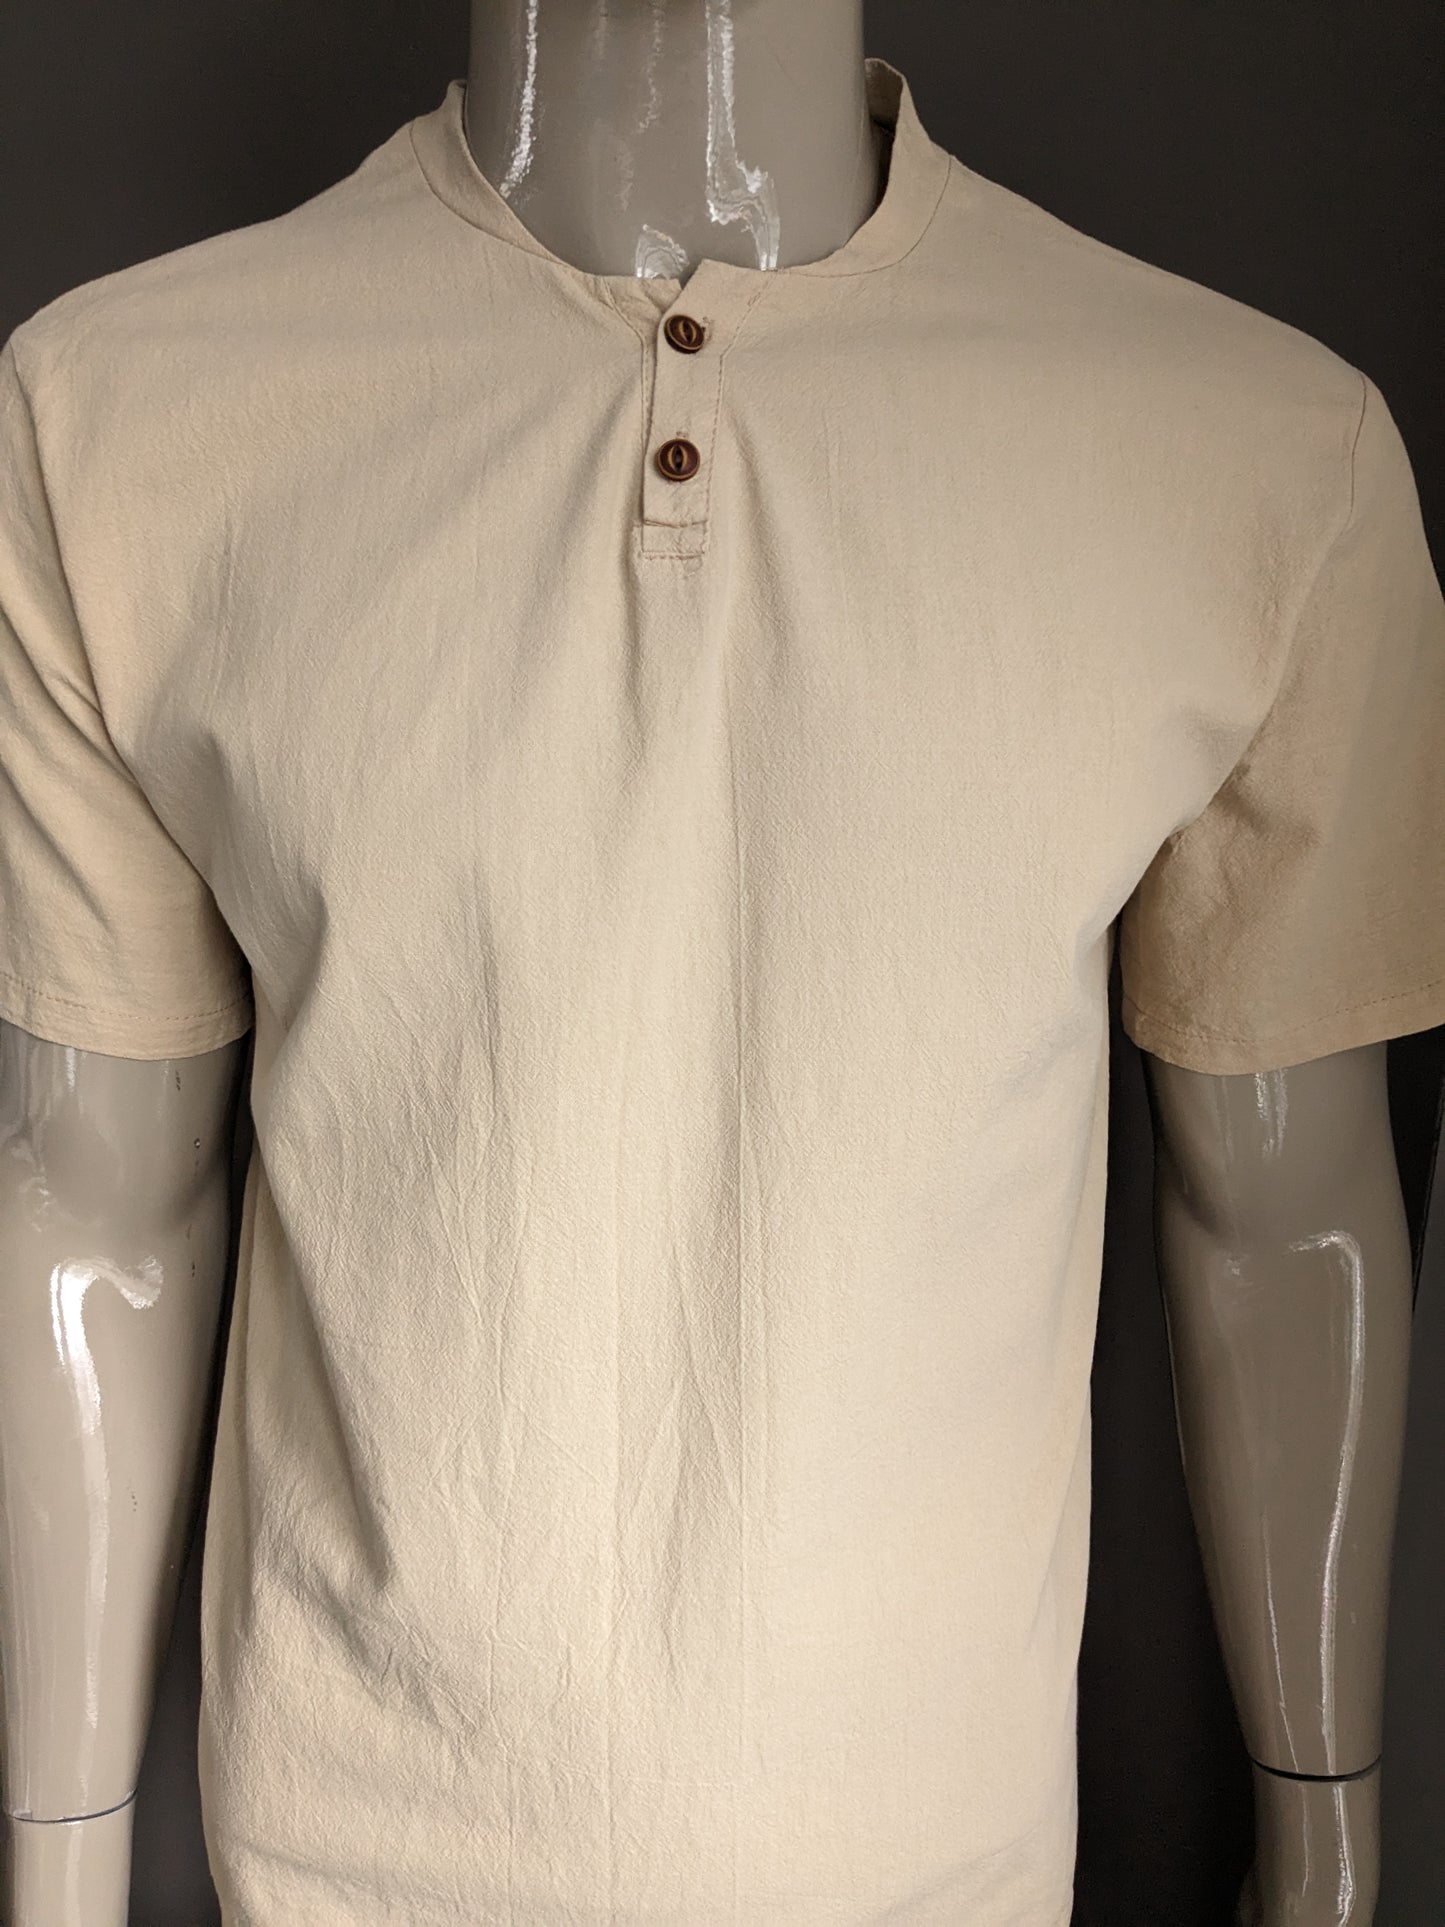 Vintage shirt / polo met Mao / opstaande kraag en knoopjes. Beige. Maat L.